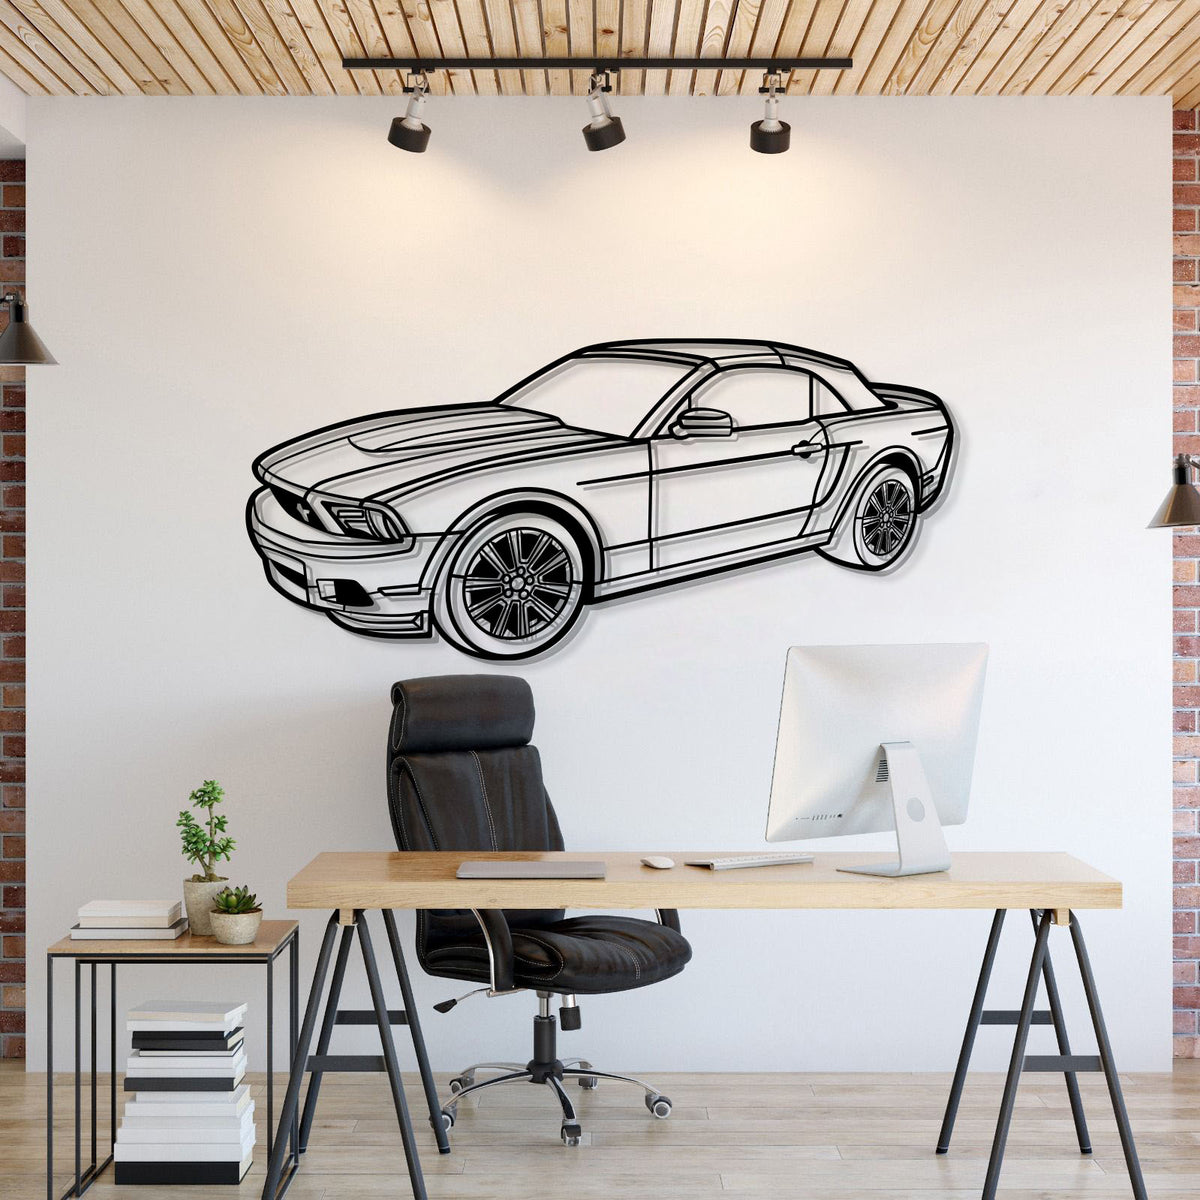 2011 Mustang Convertible Perspective Metal Car Wall Art - MT1267